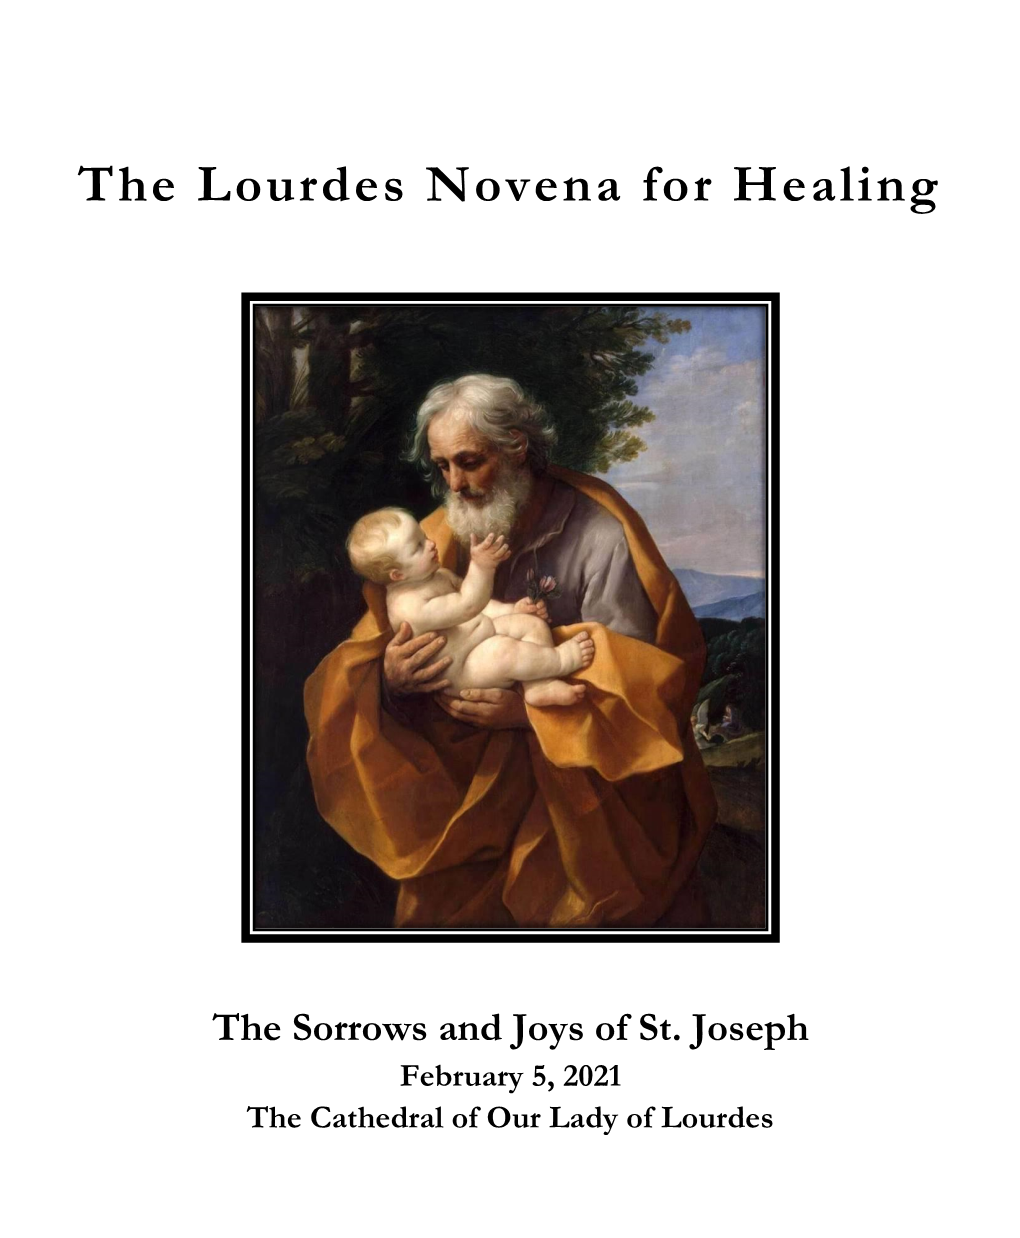 The Lourdes Novena for Healing